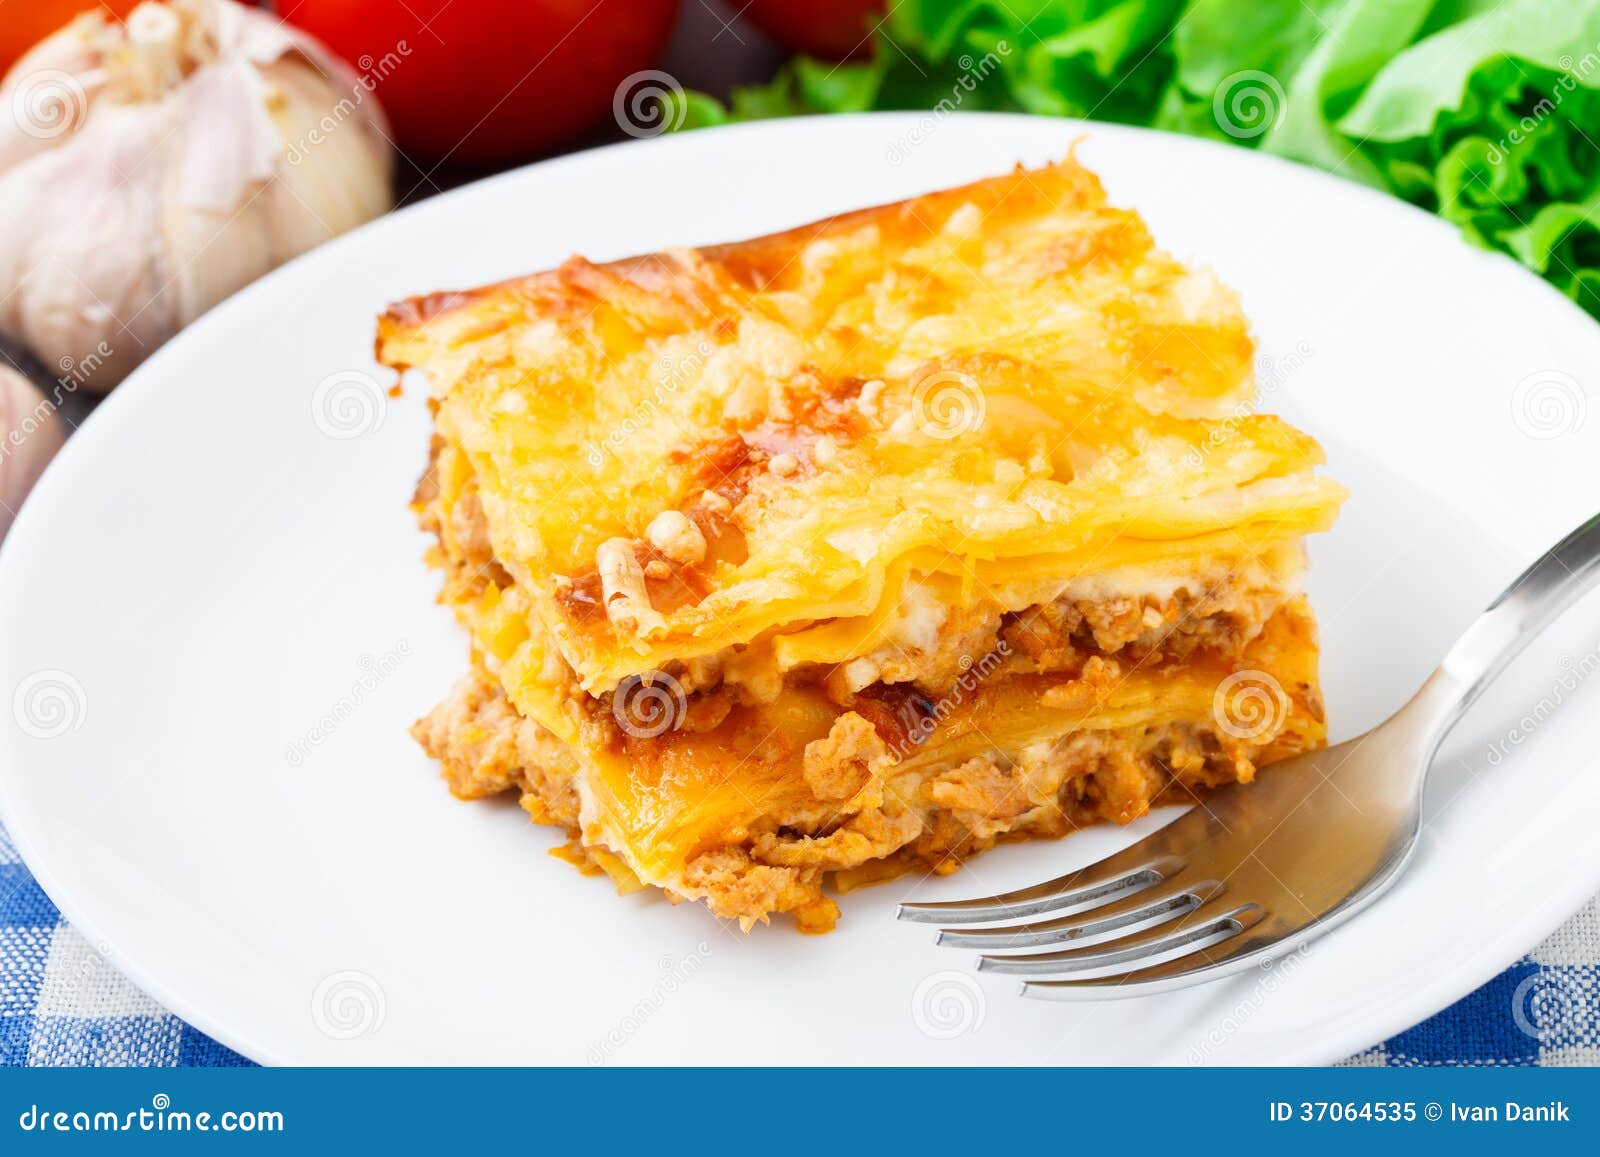 Italian lasagna on a plate stock image. Image of dinner - 37064535